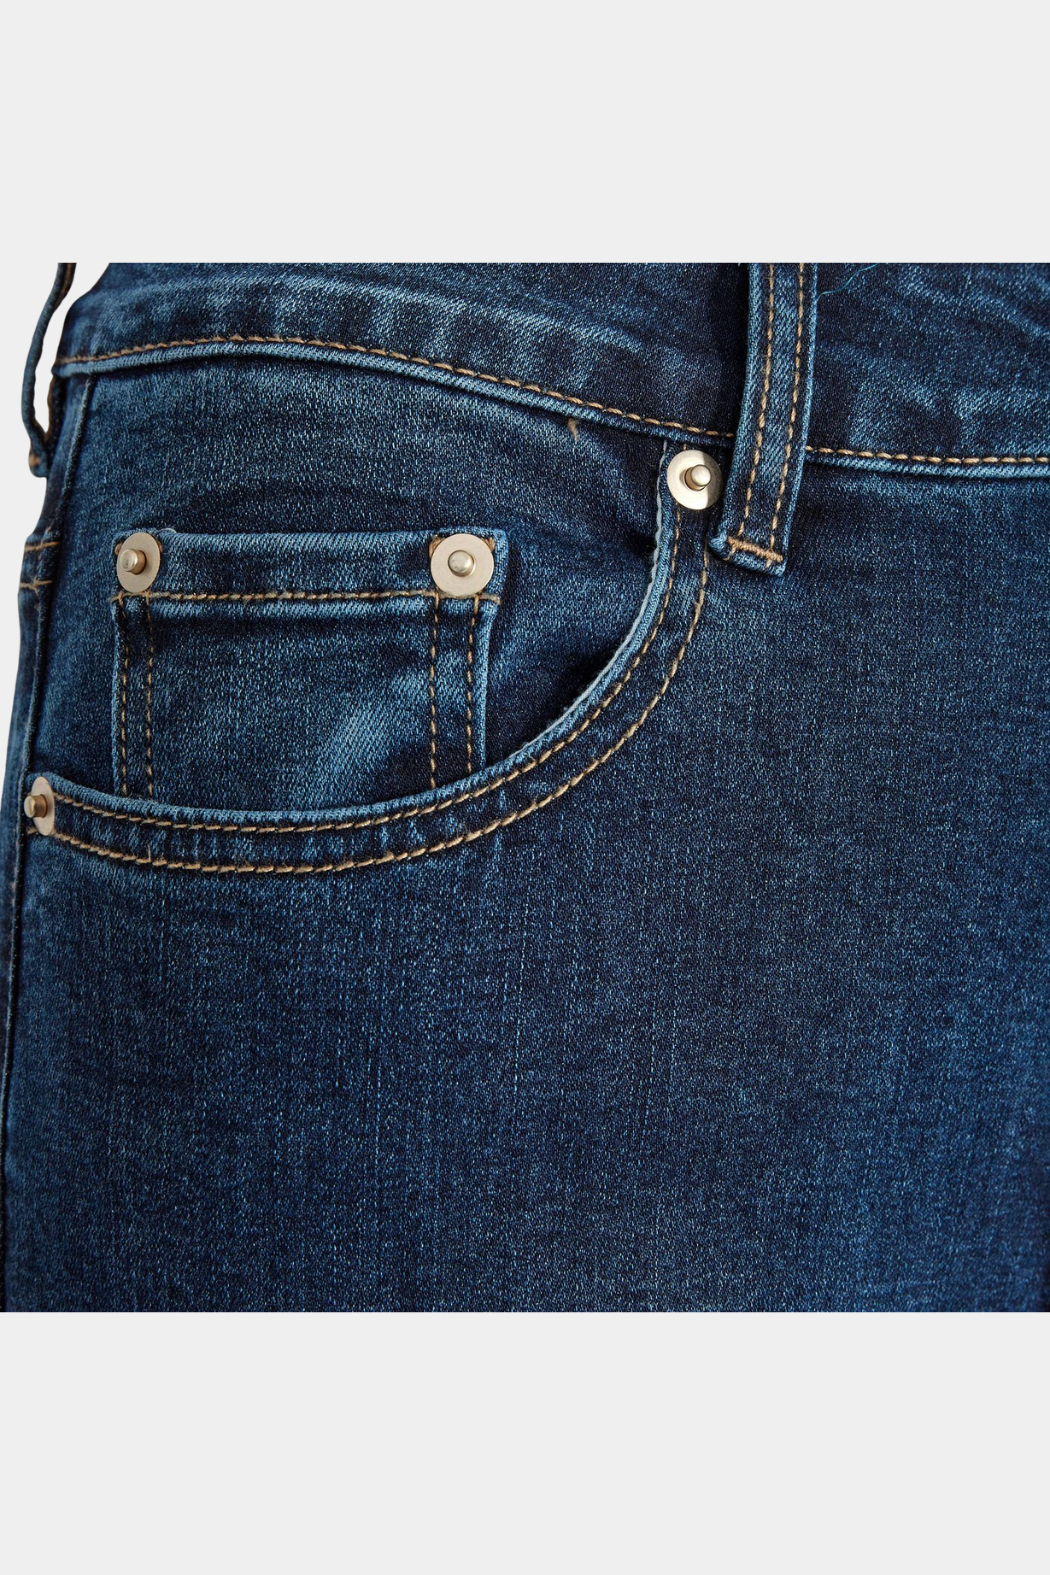 SNOS238 Jeans, dark blue